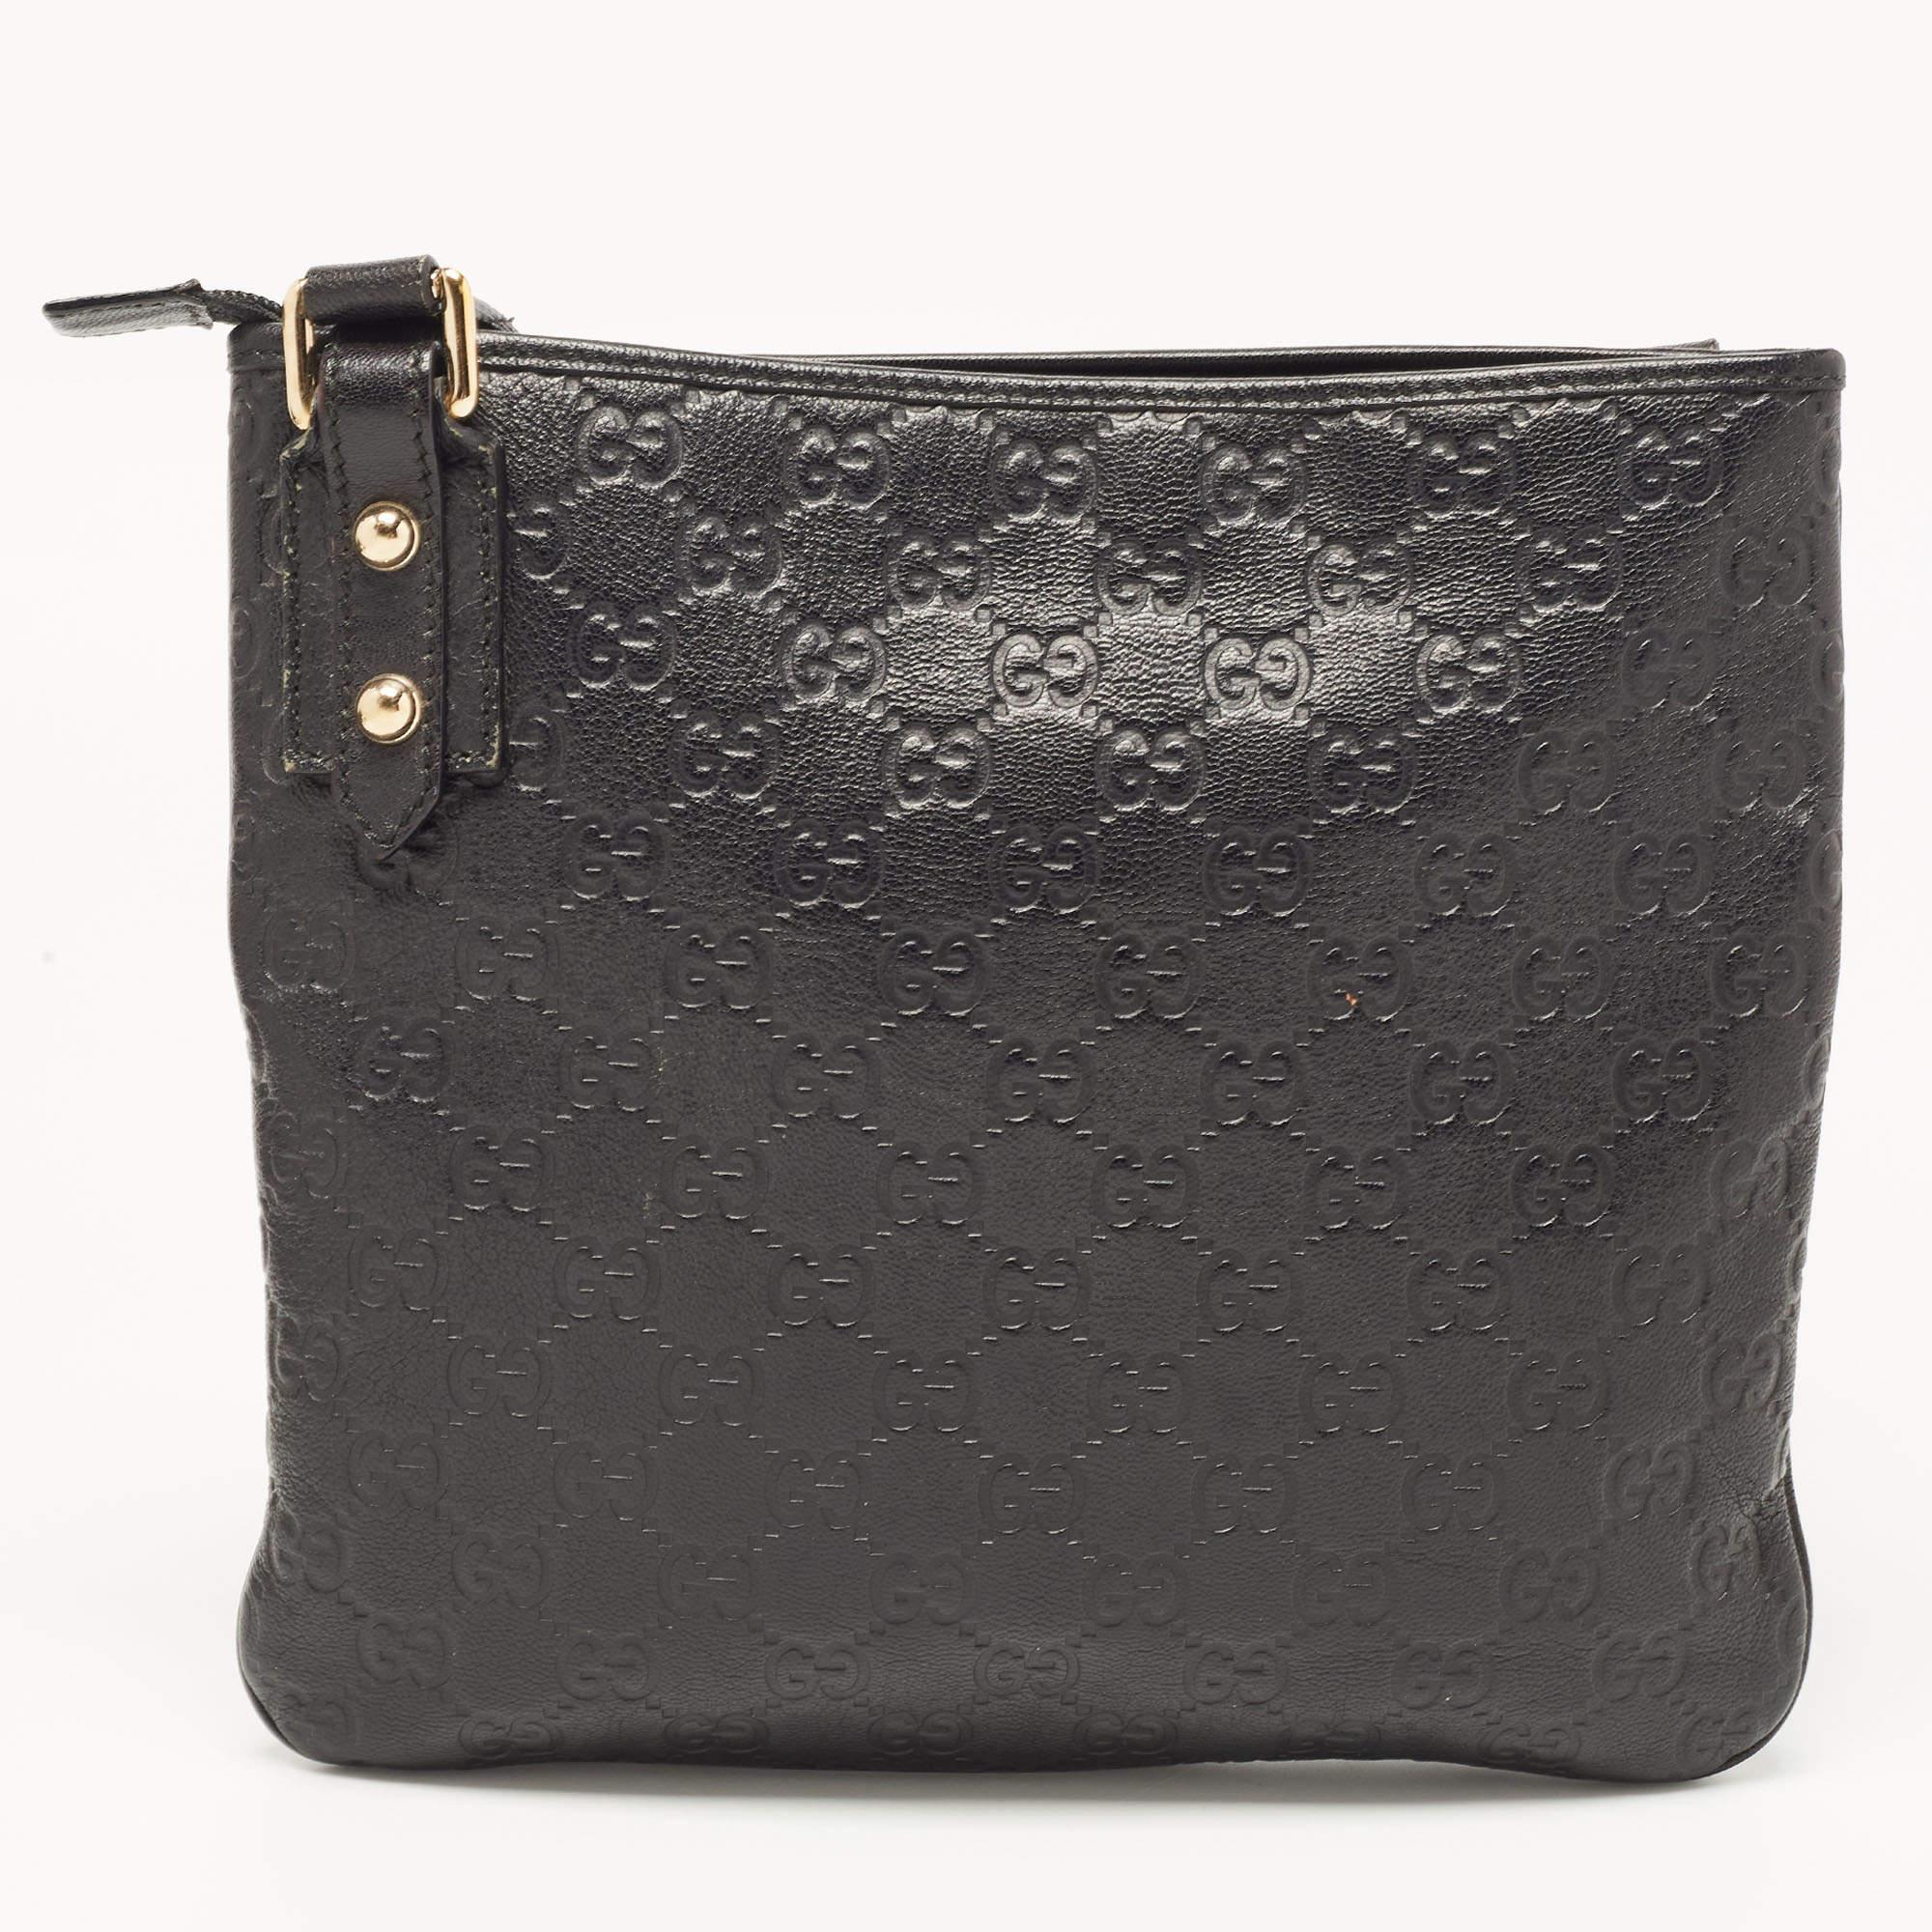 Gucci Black Guccissima Leather Messenger Bag For Sale 6